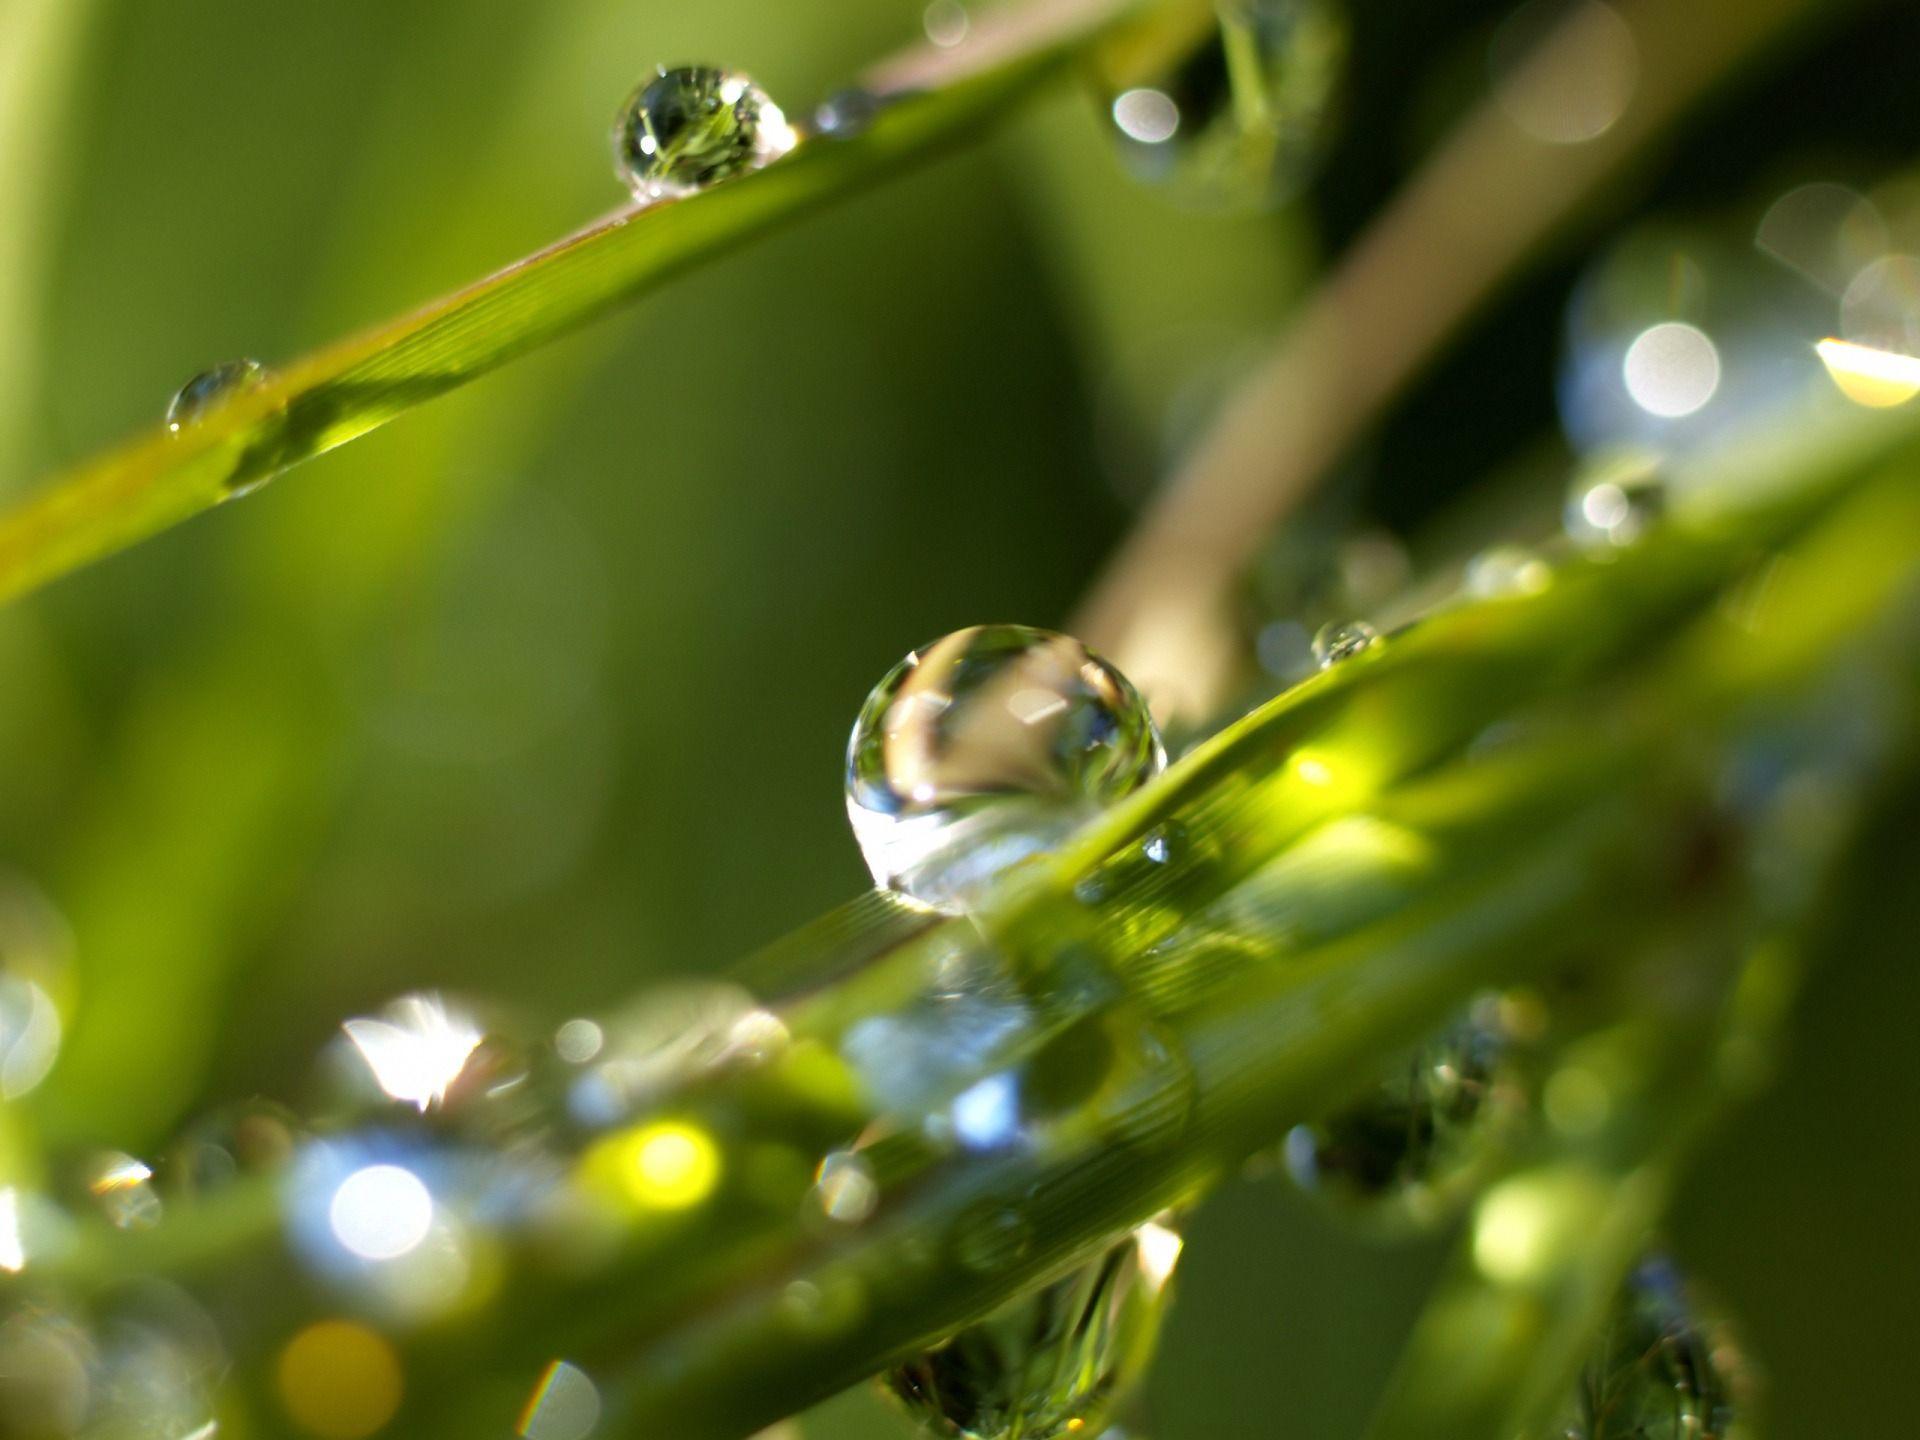 Rain drops Wallpaper Plants Nature Wallpaper in jpg format for free download